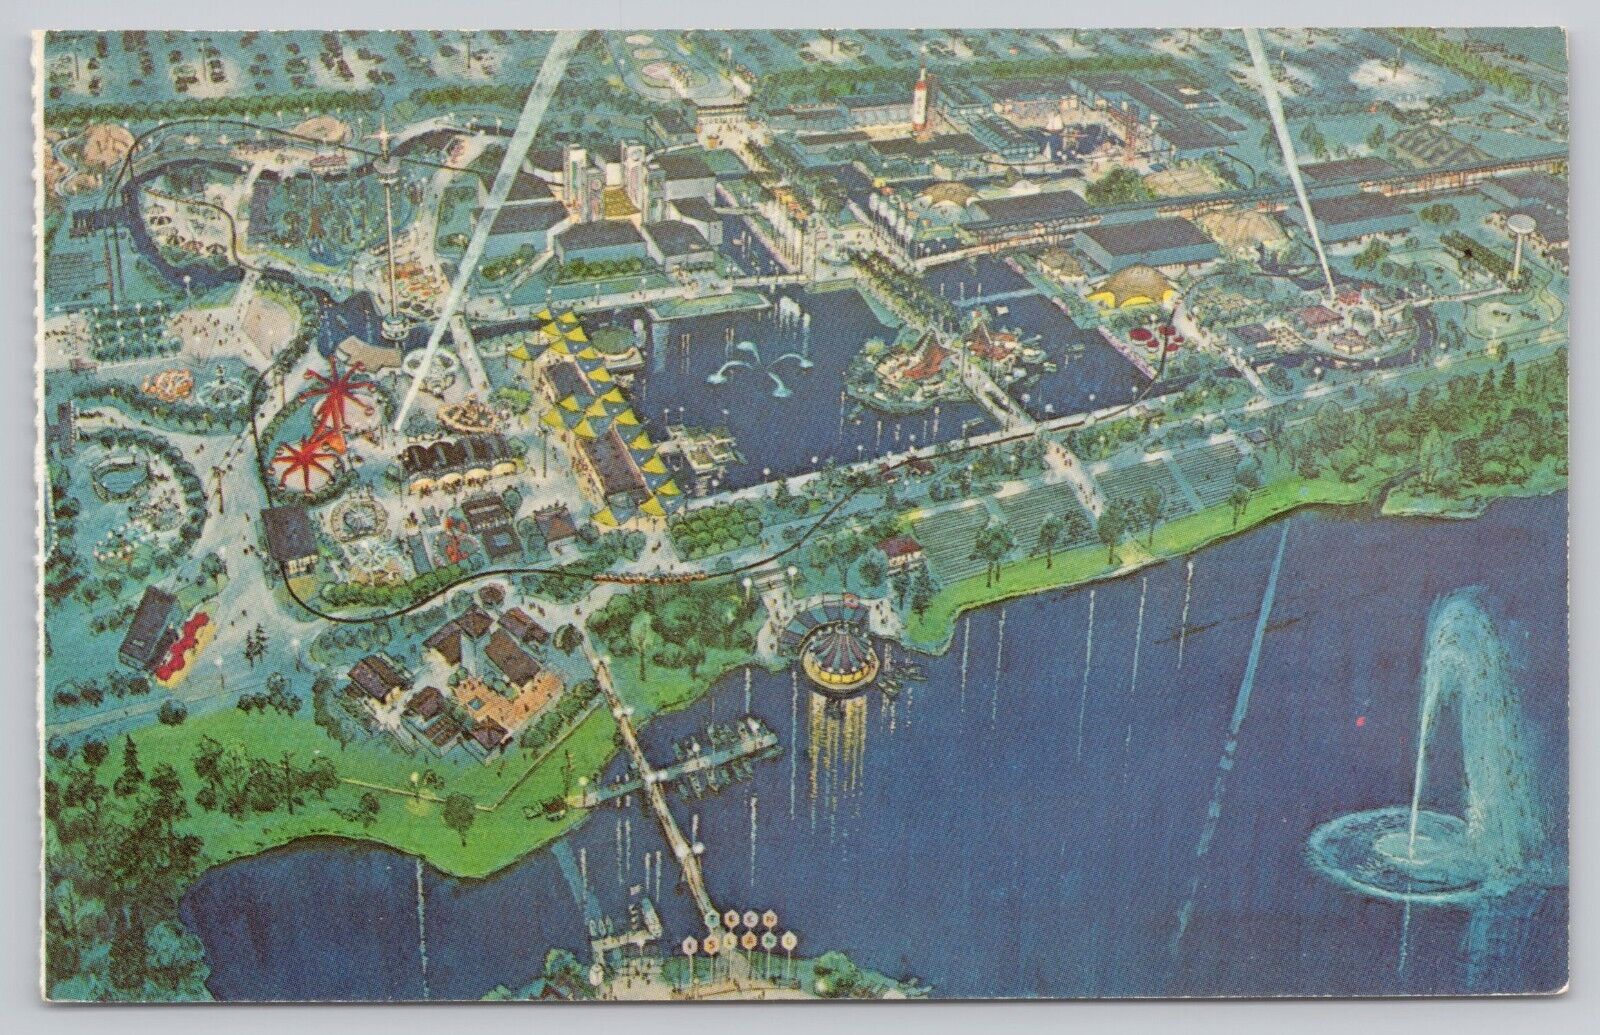 Sacramento California, Cal Expo Aerial View Artist Drawing, Vintage Postcard